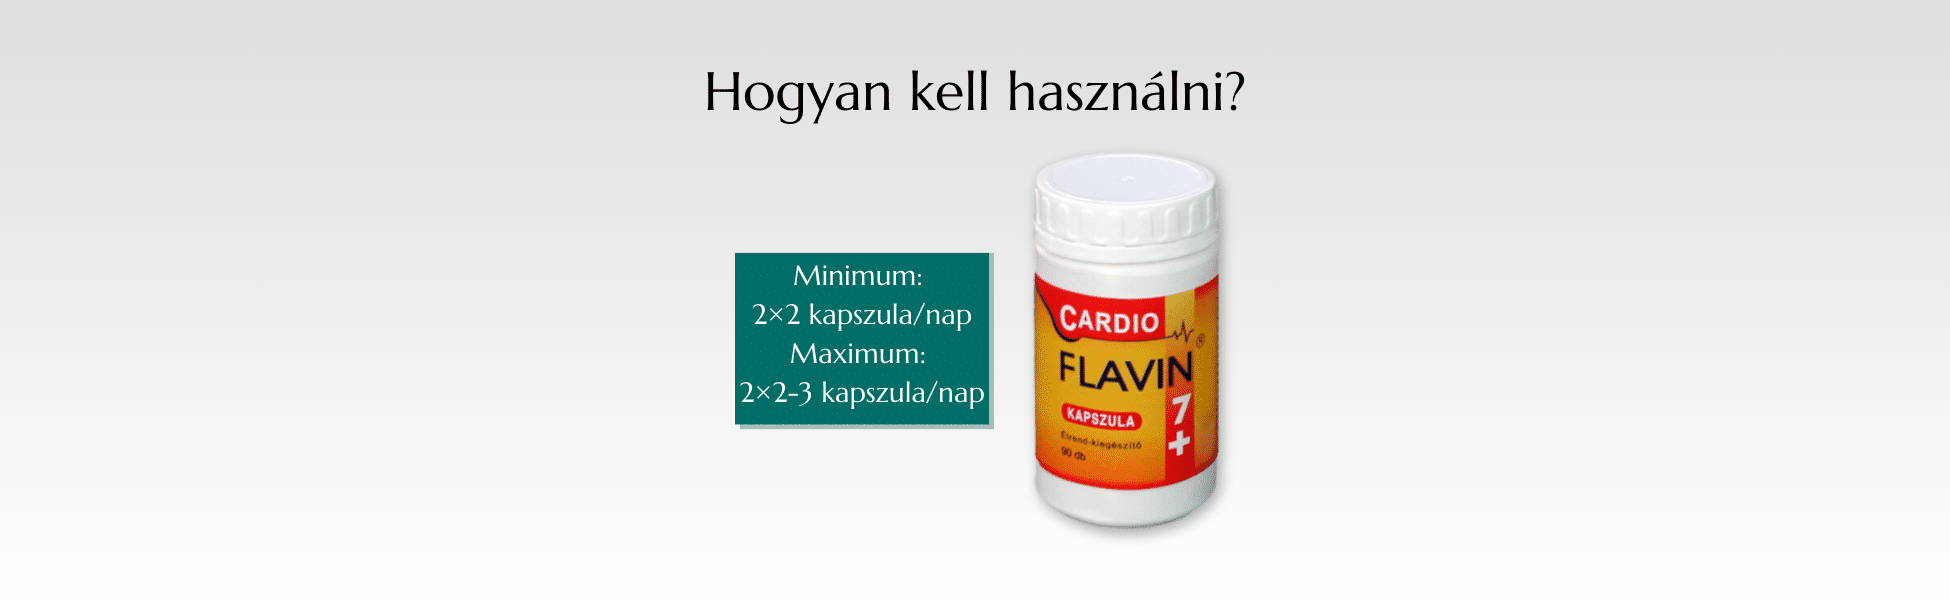 Cardio Flavin 7+ kapszula